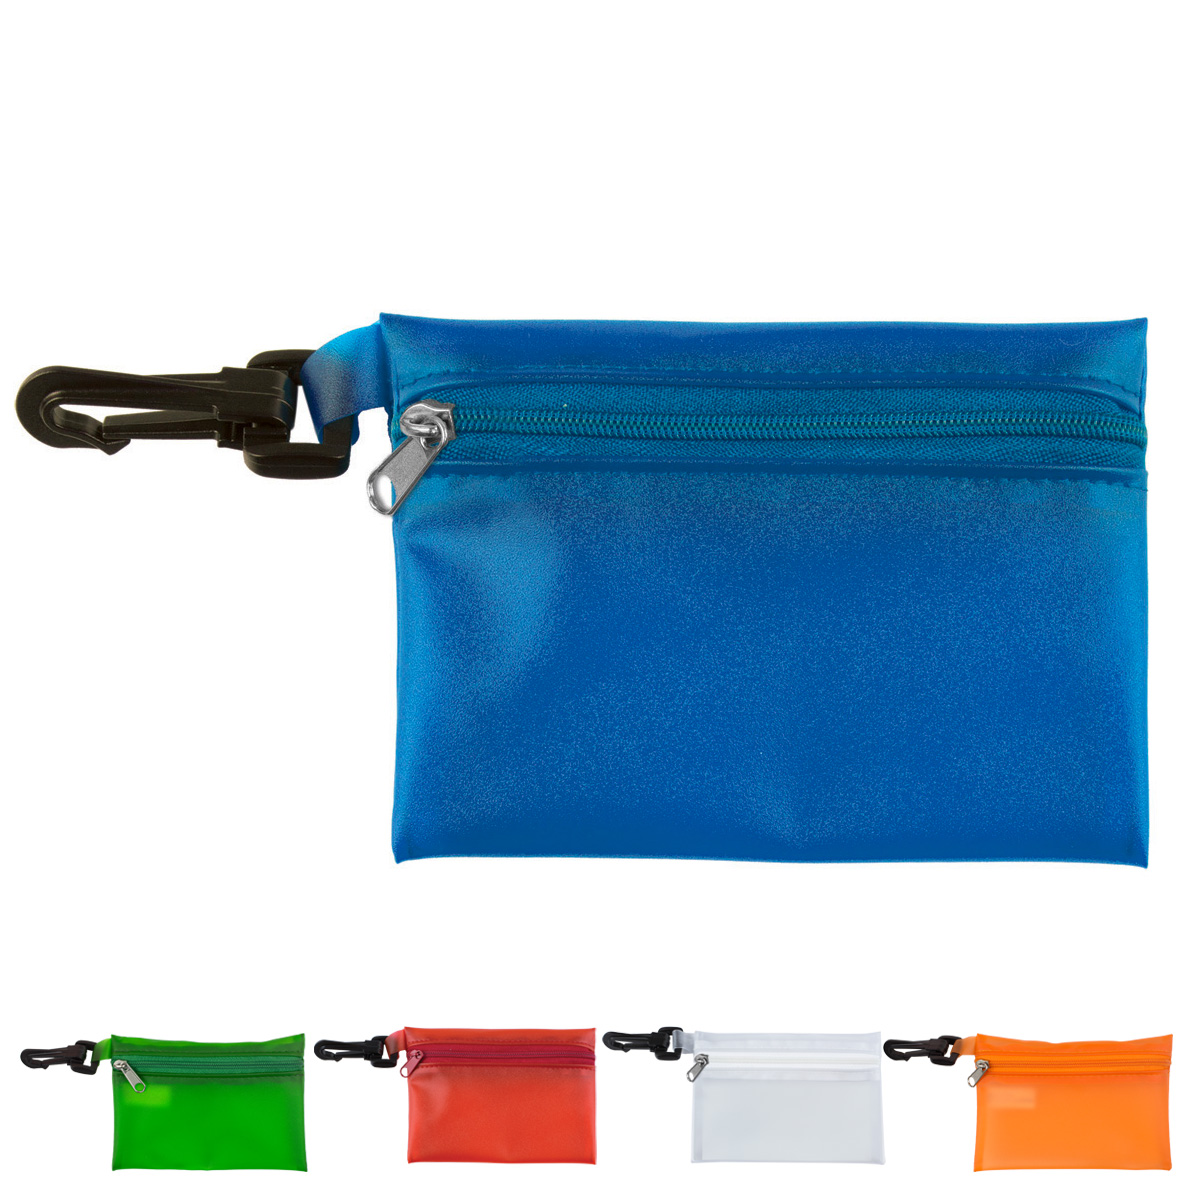 4-7/8" W x 3-1/8" H "BALI" Translucent Zipper Storage Pack With Plastic Hook